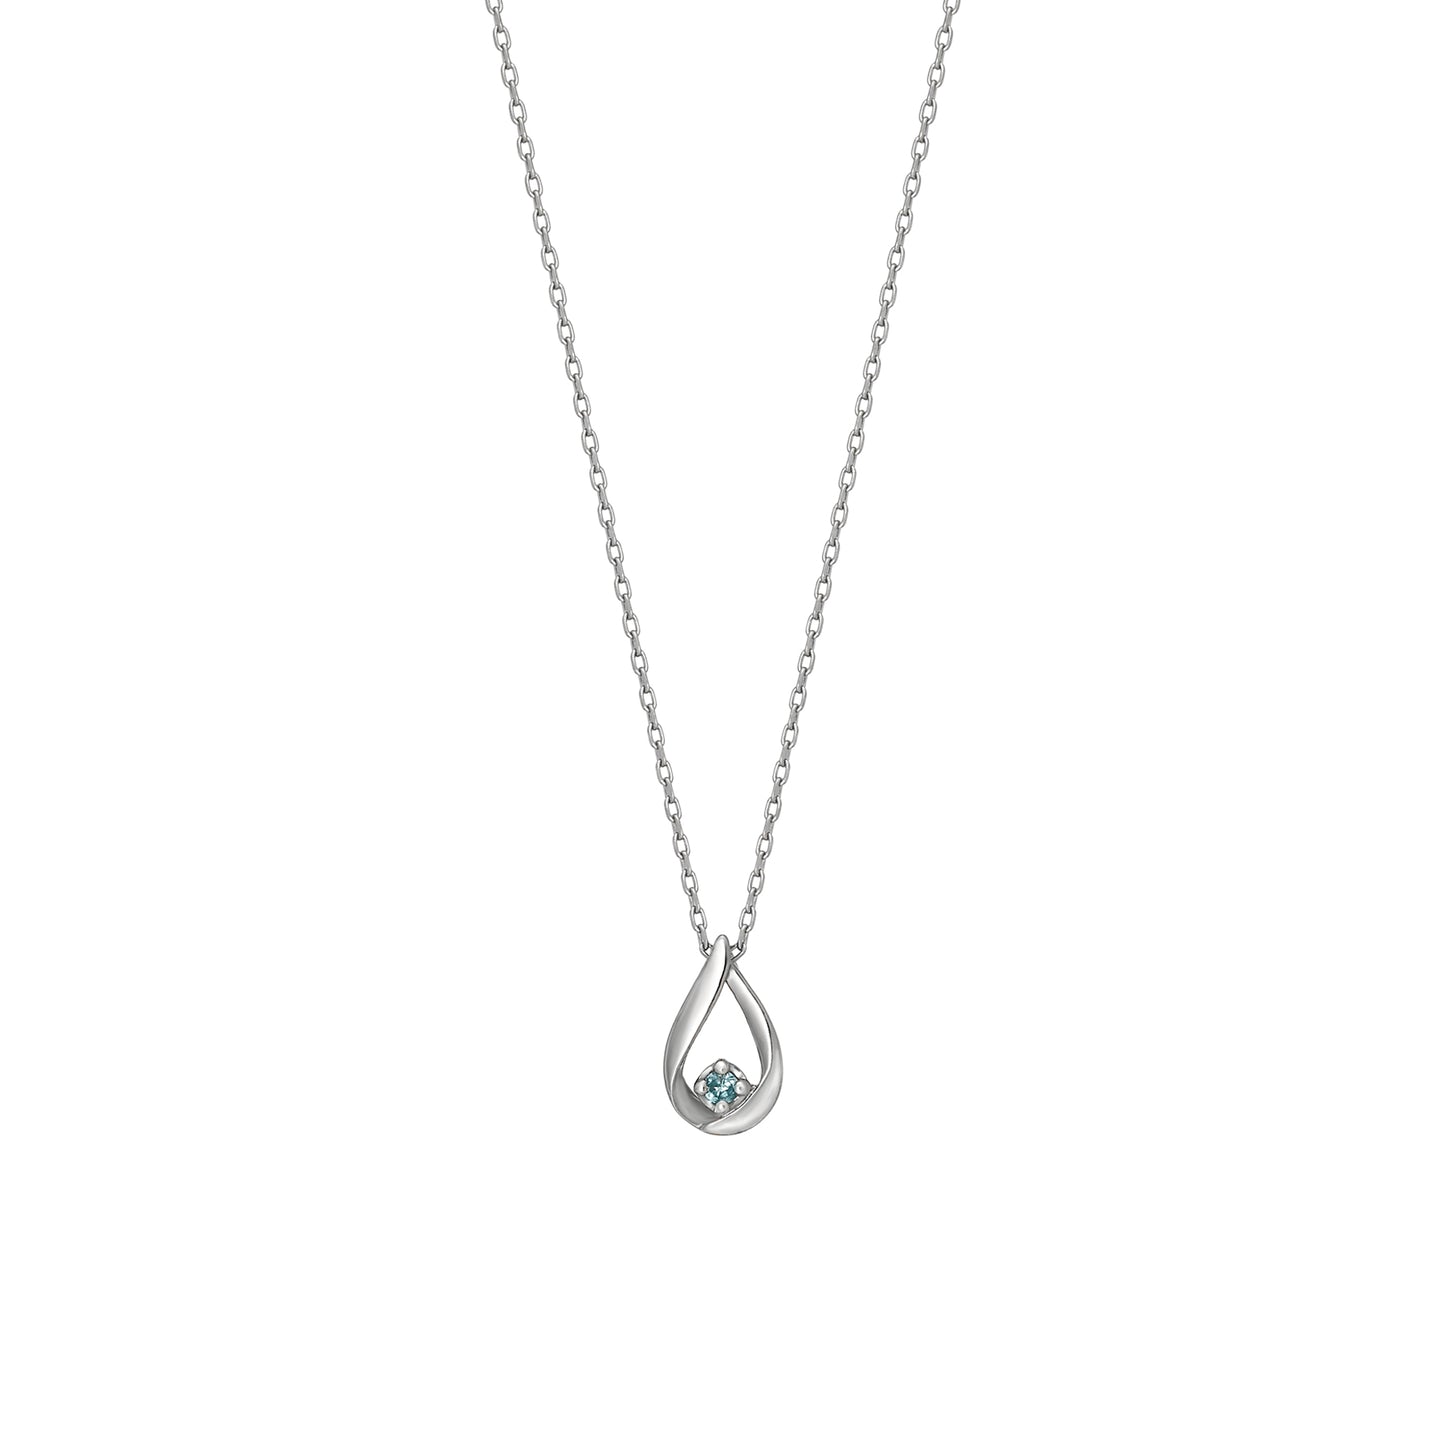 10K White Gold Diamond Dew Drop Necklace - Product Image